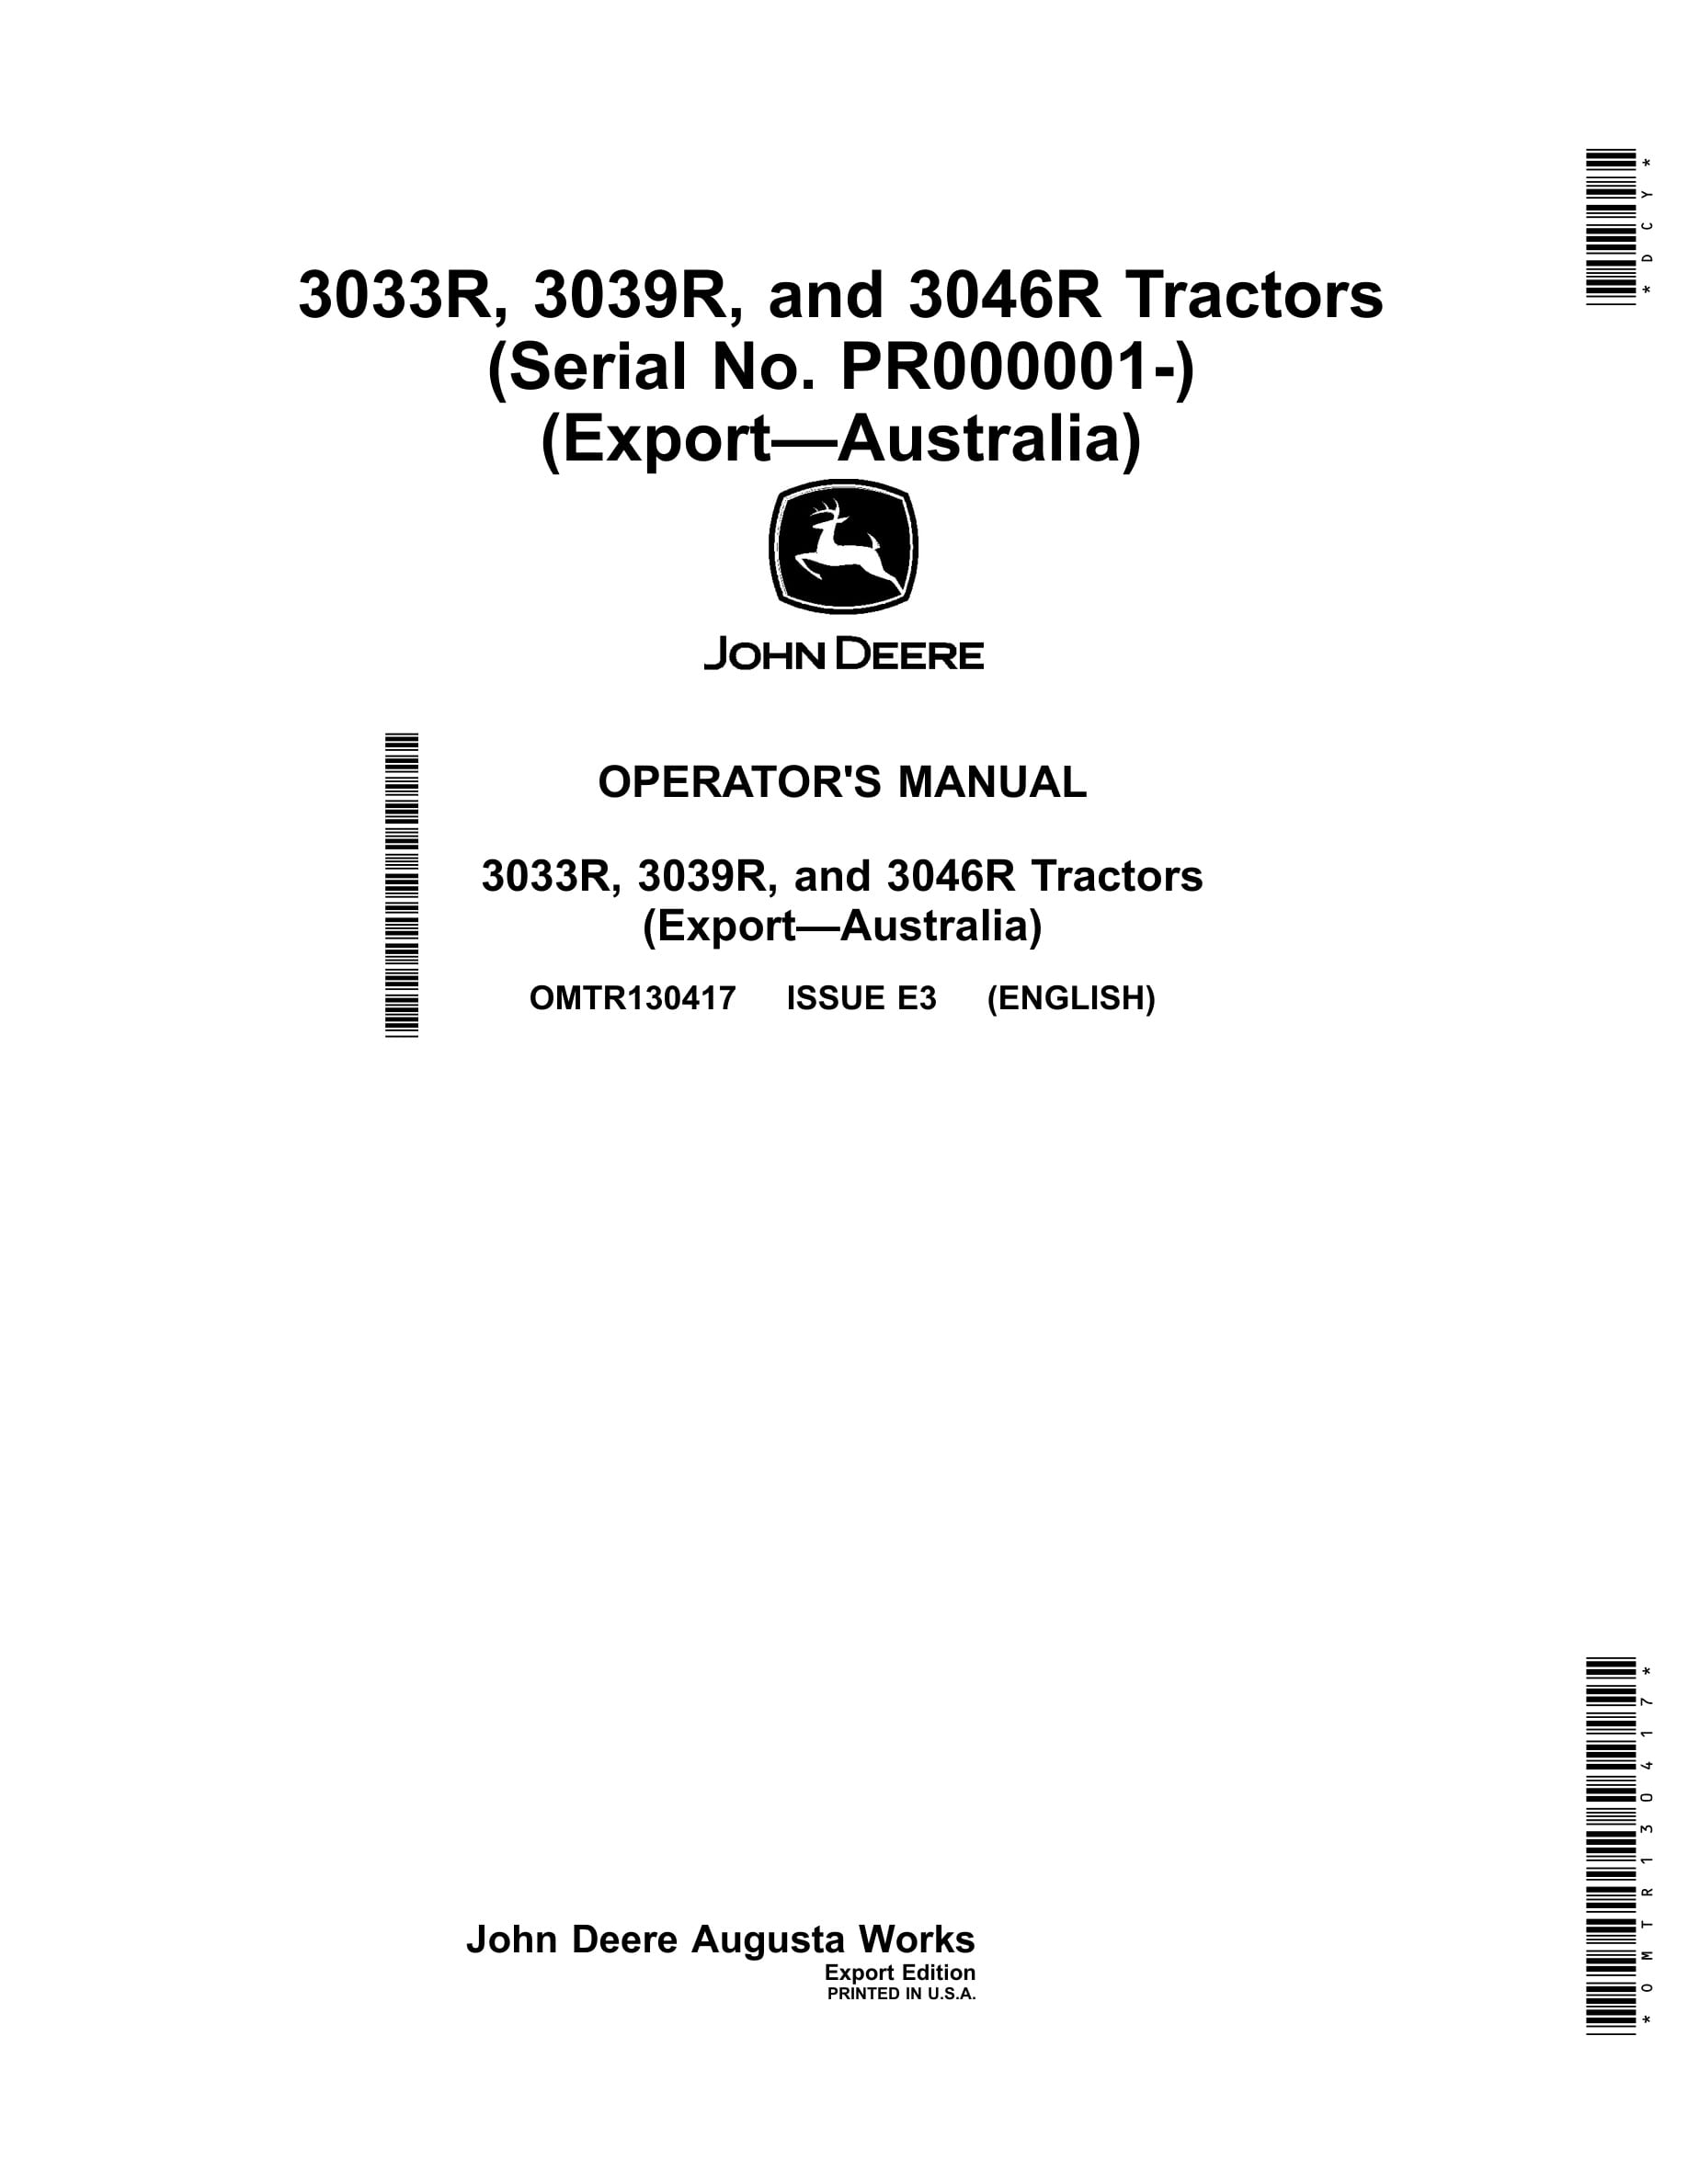 John Deere 3033r, 3039r, And 3046r Tractors Operator Manuals OMTR130417-1